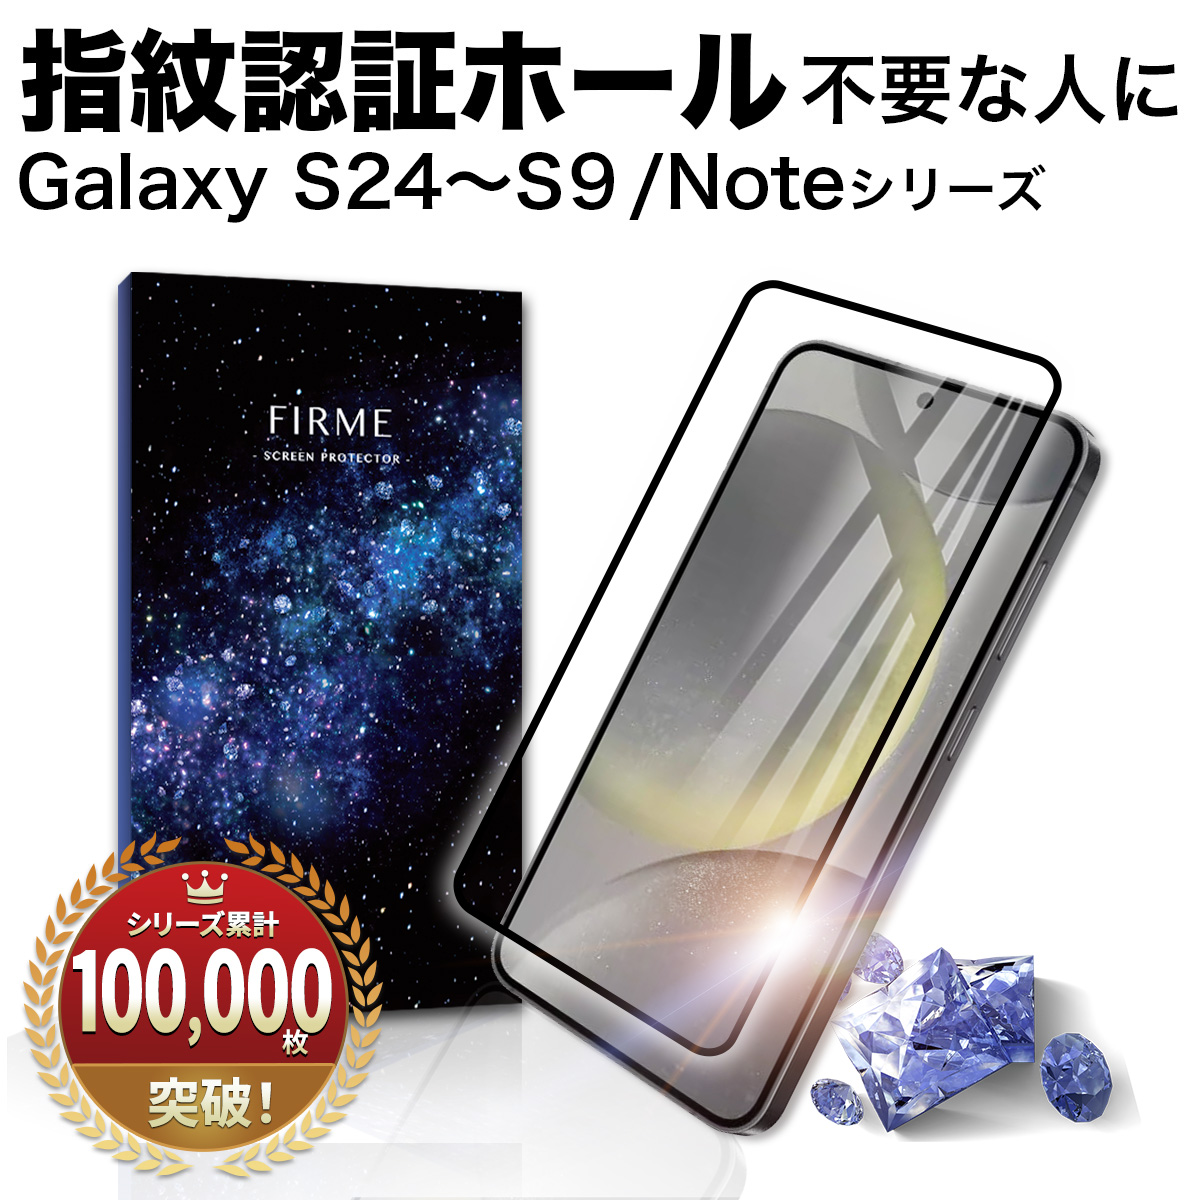 Galaxy S24 S23 Ultra ガラス フィルム galaxy S23 ultra フィルム S20 S10 全面 Note10 Note9 S9 S8 ギャラクシー 液晶 画面 保護 湾曲 滑らか 3D フルサイズ